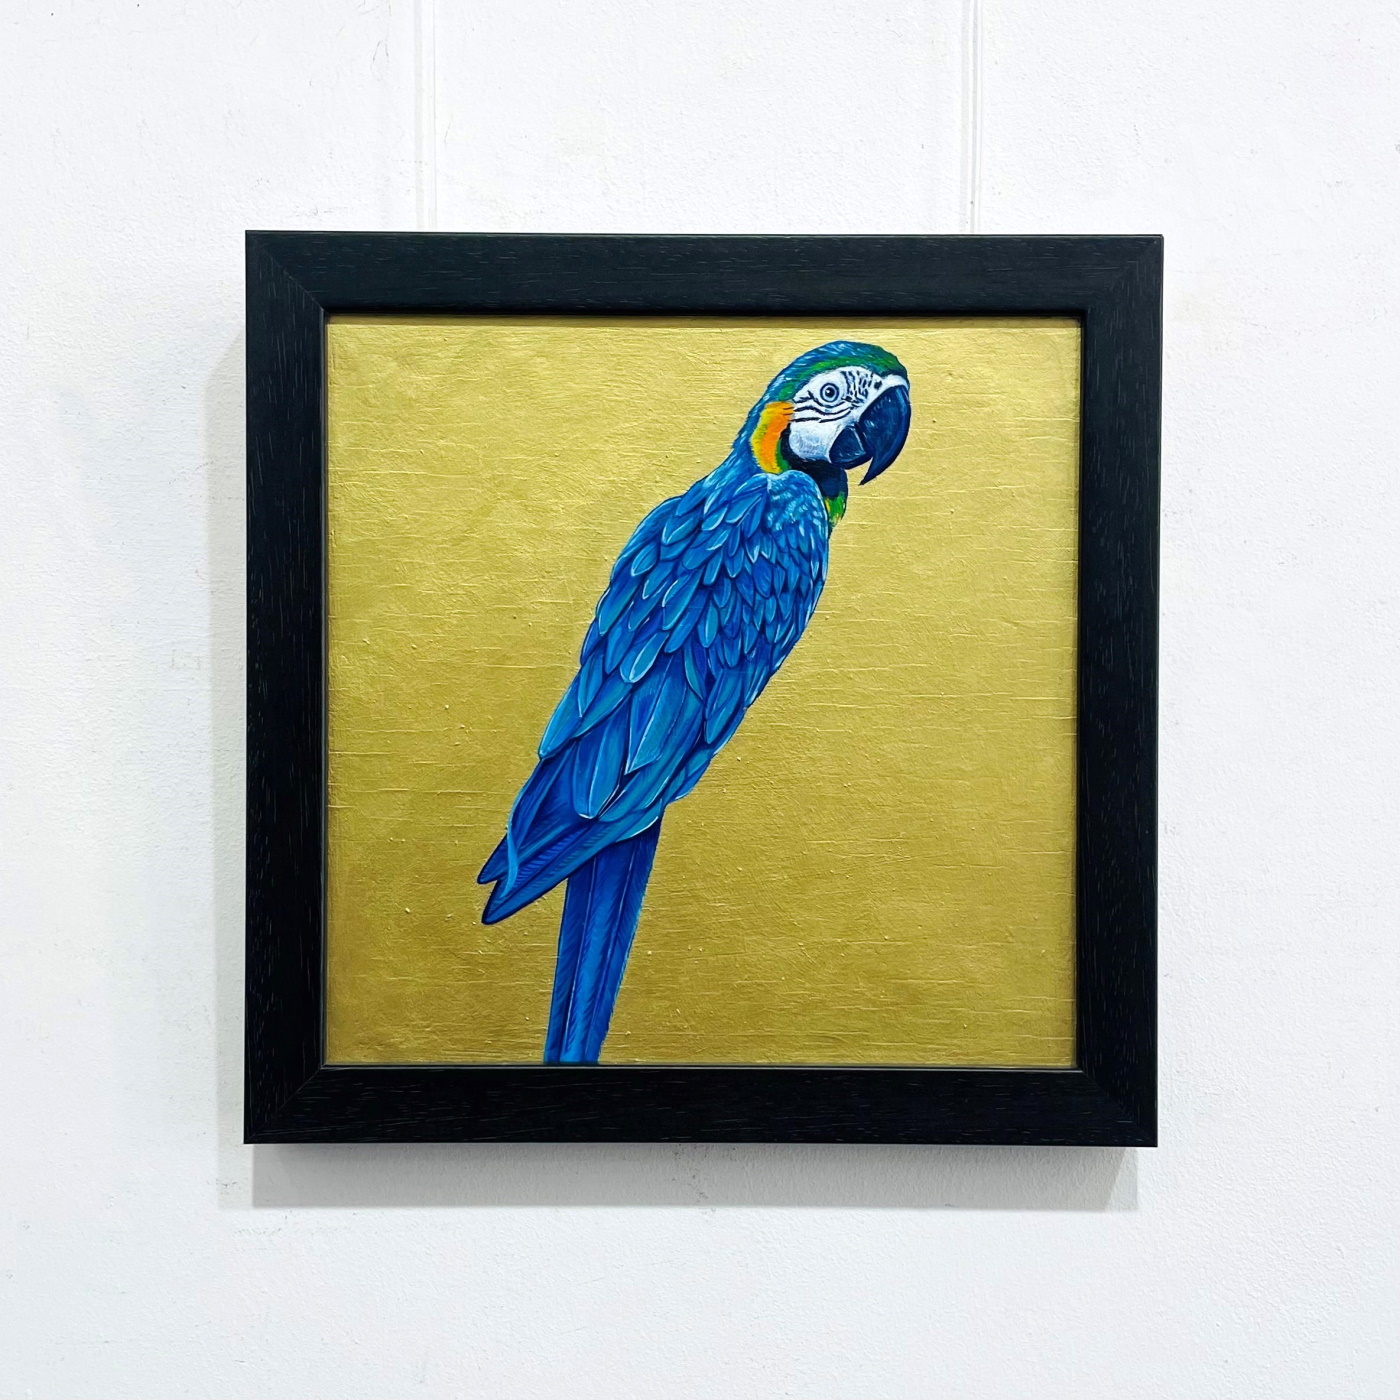 'Blue Parrot' by artist Victoria Heald